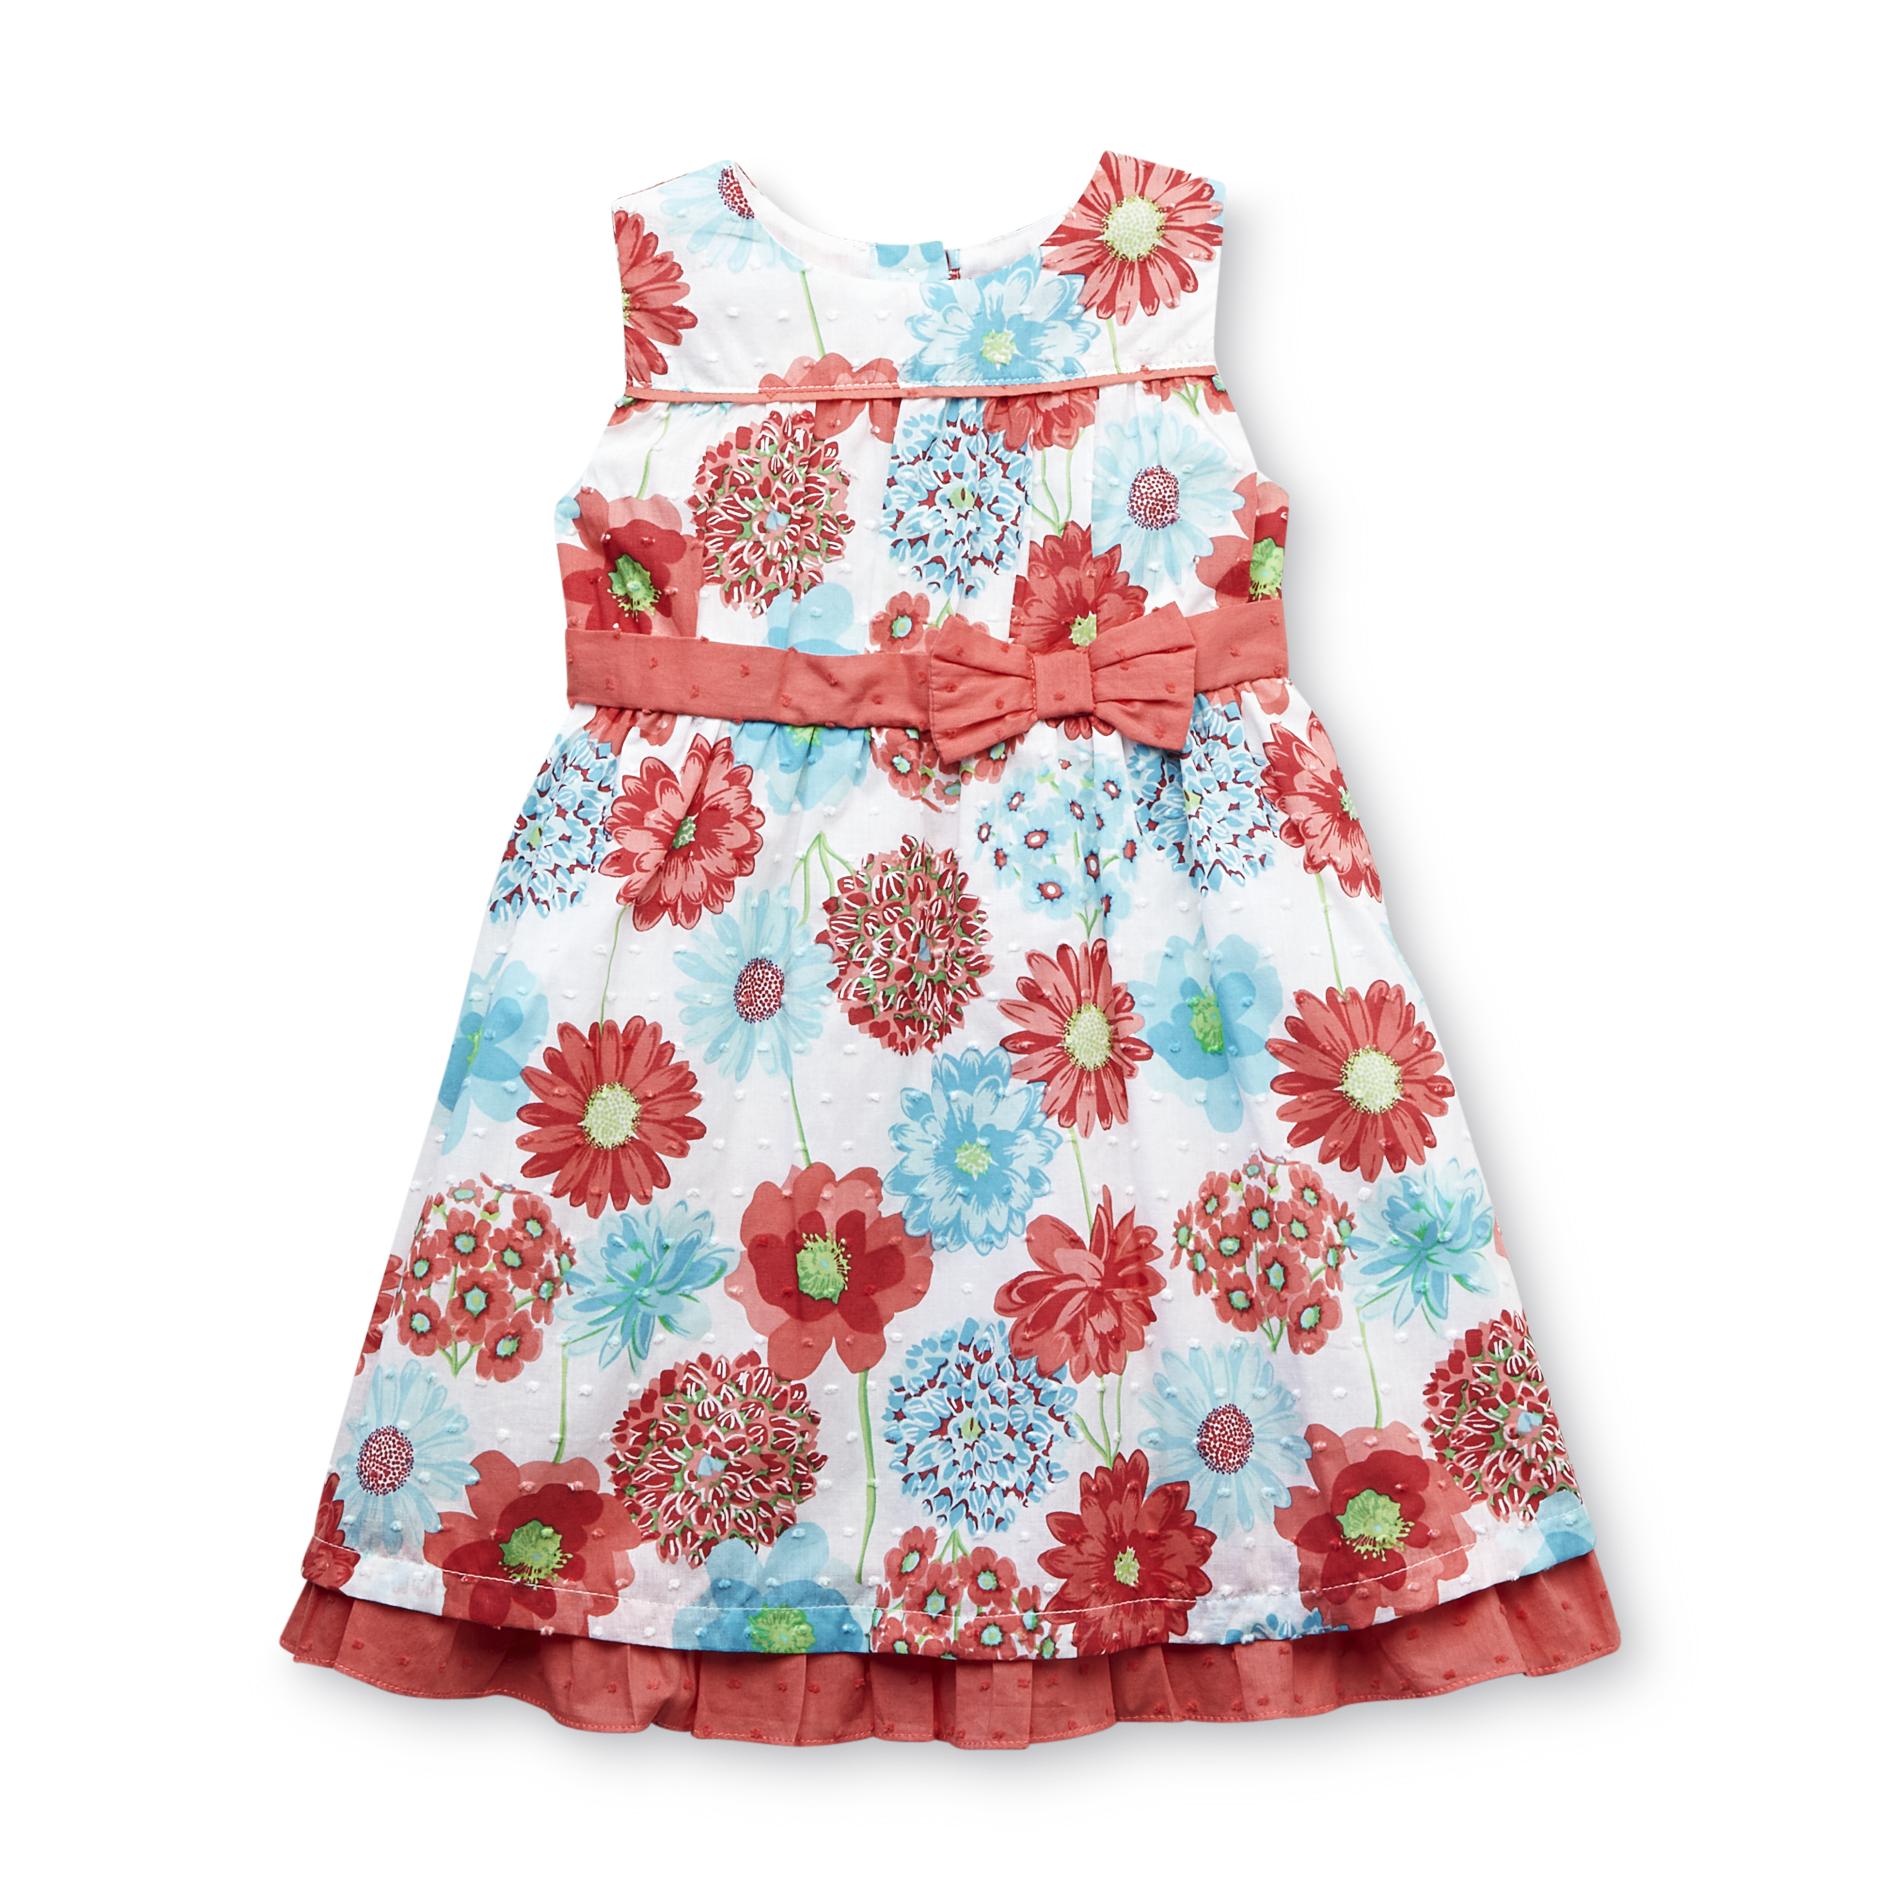 Penny M Infant & Toddler Girl's Sleeveless Dress - Floral